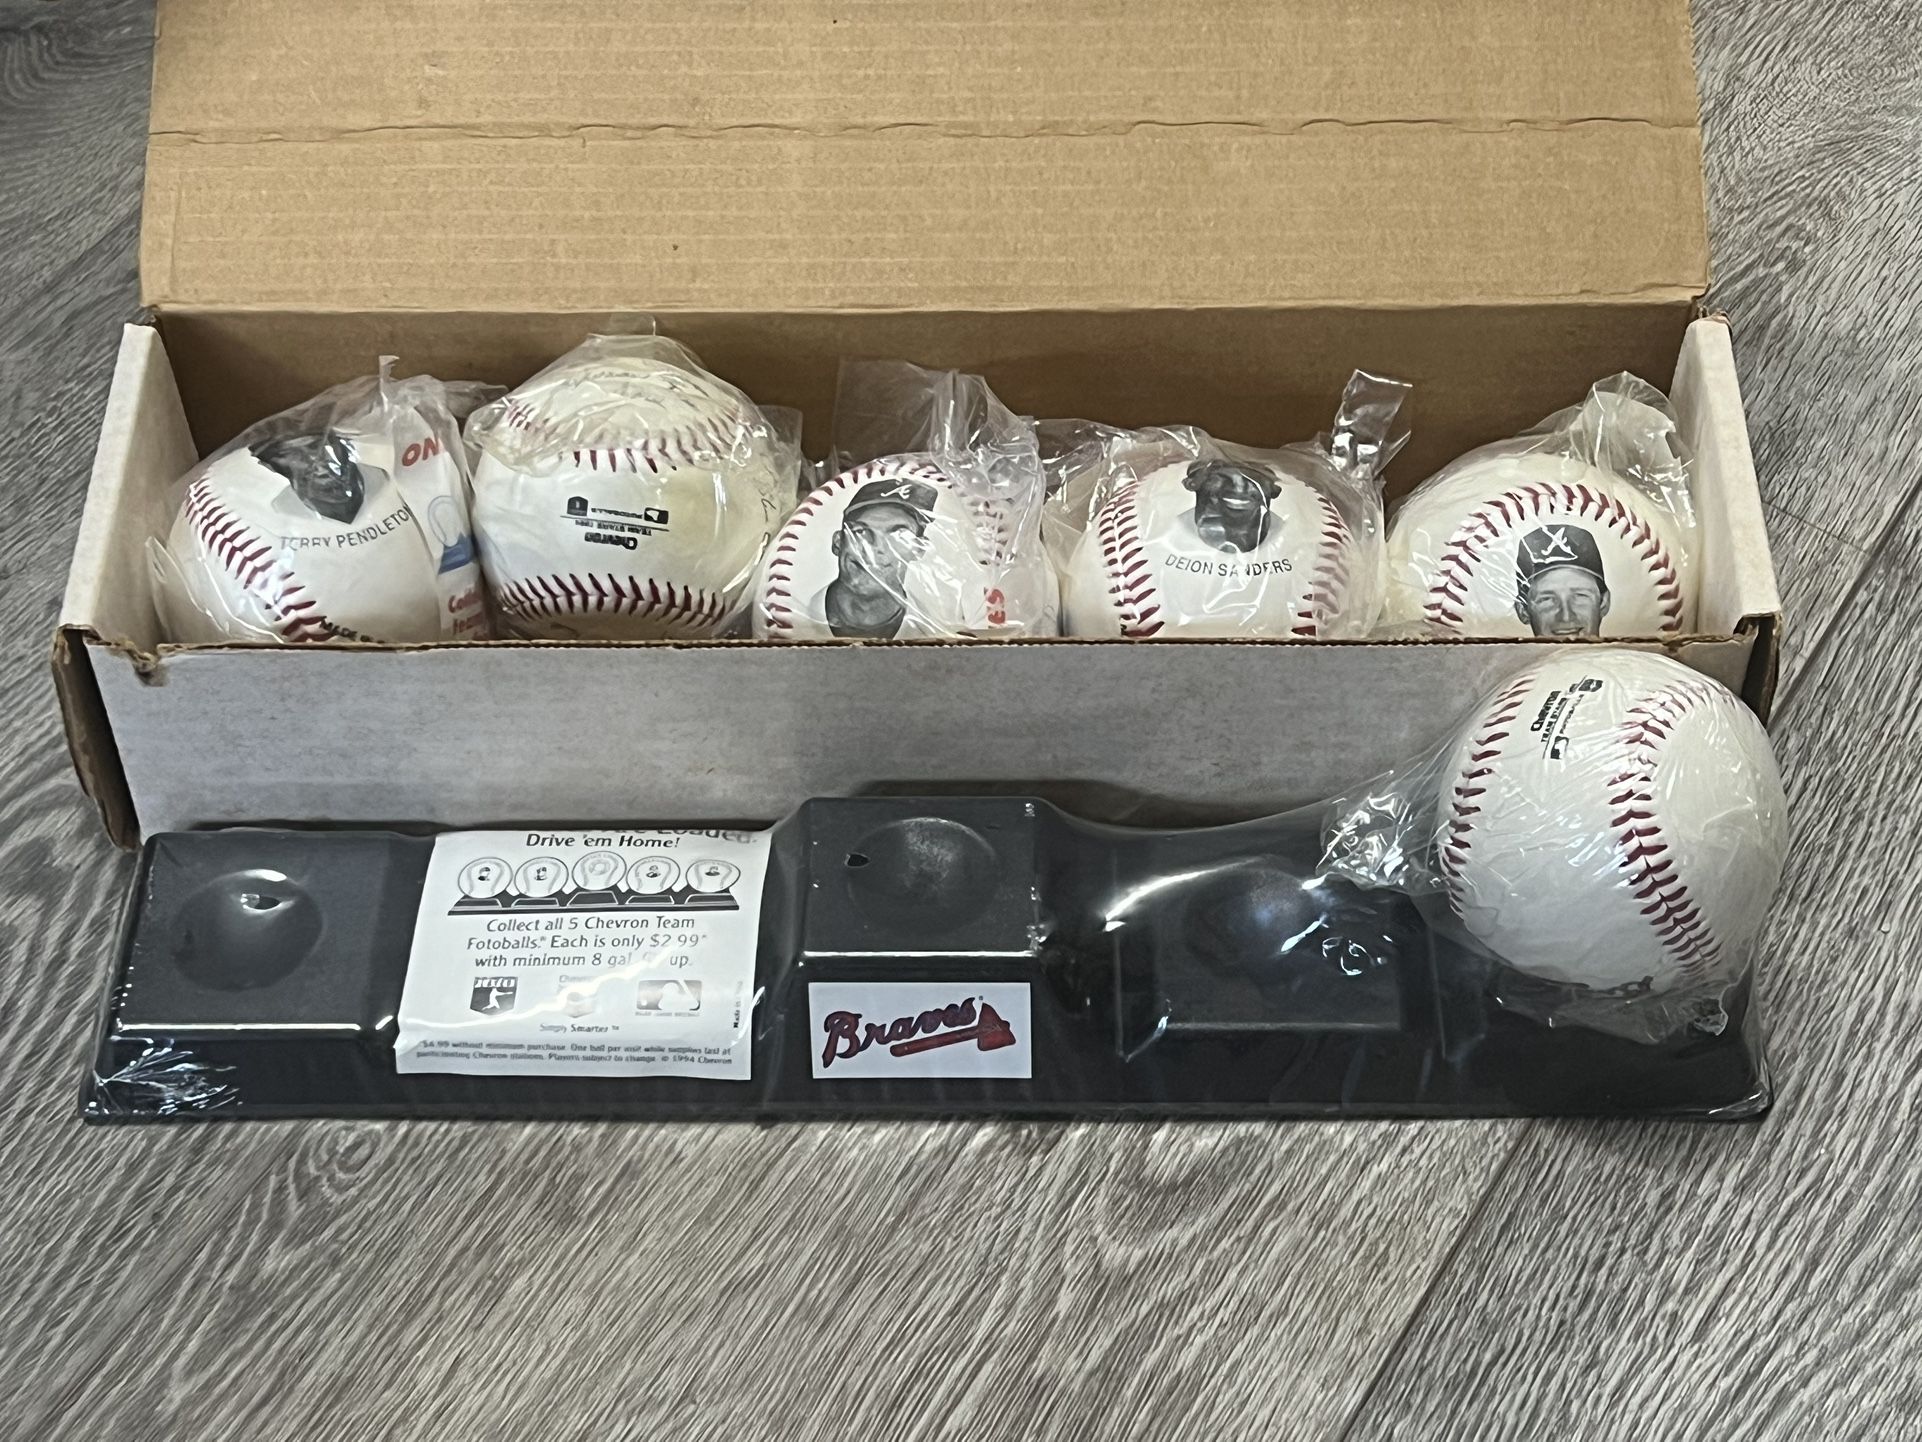 New 1993 Atlanta Braves Team Star Fotoballs Baseball Collection Set by Chevron Gas Station 